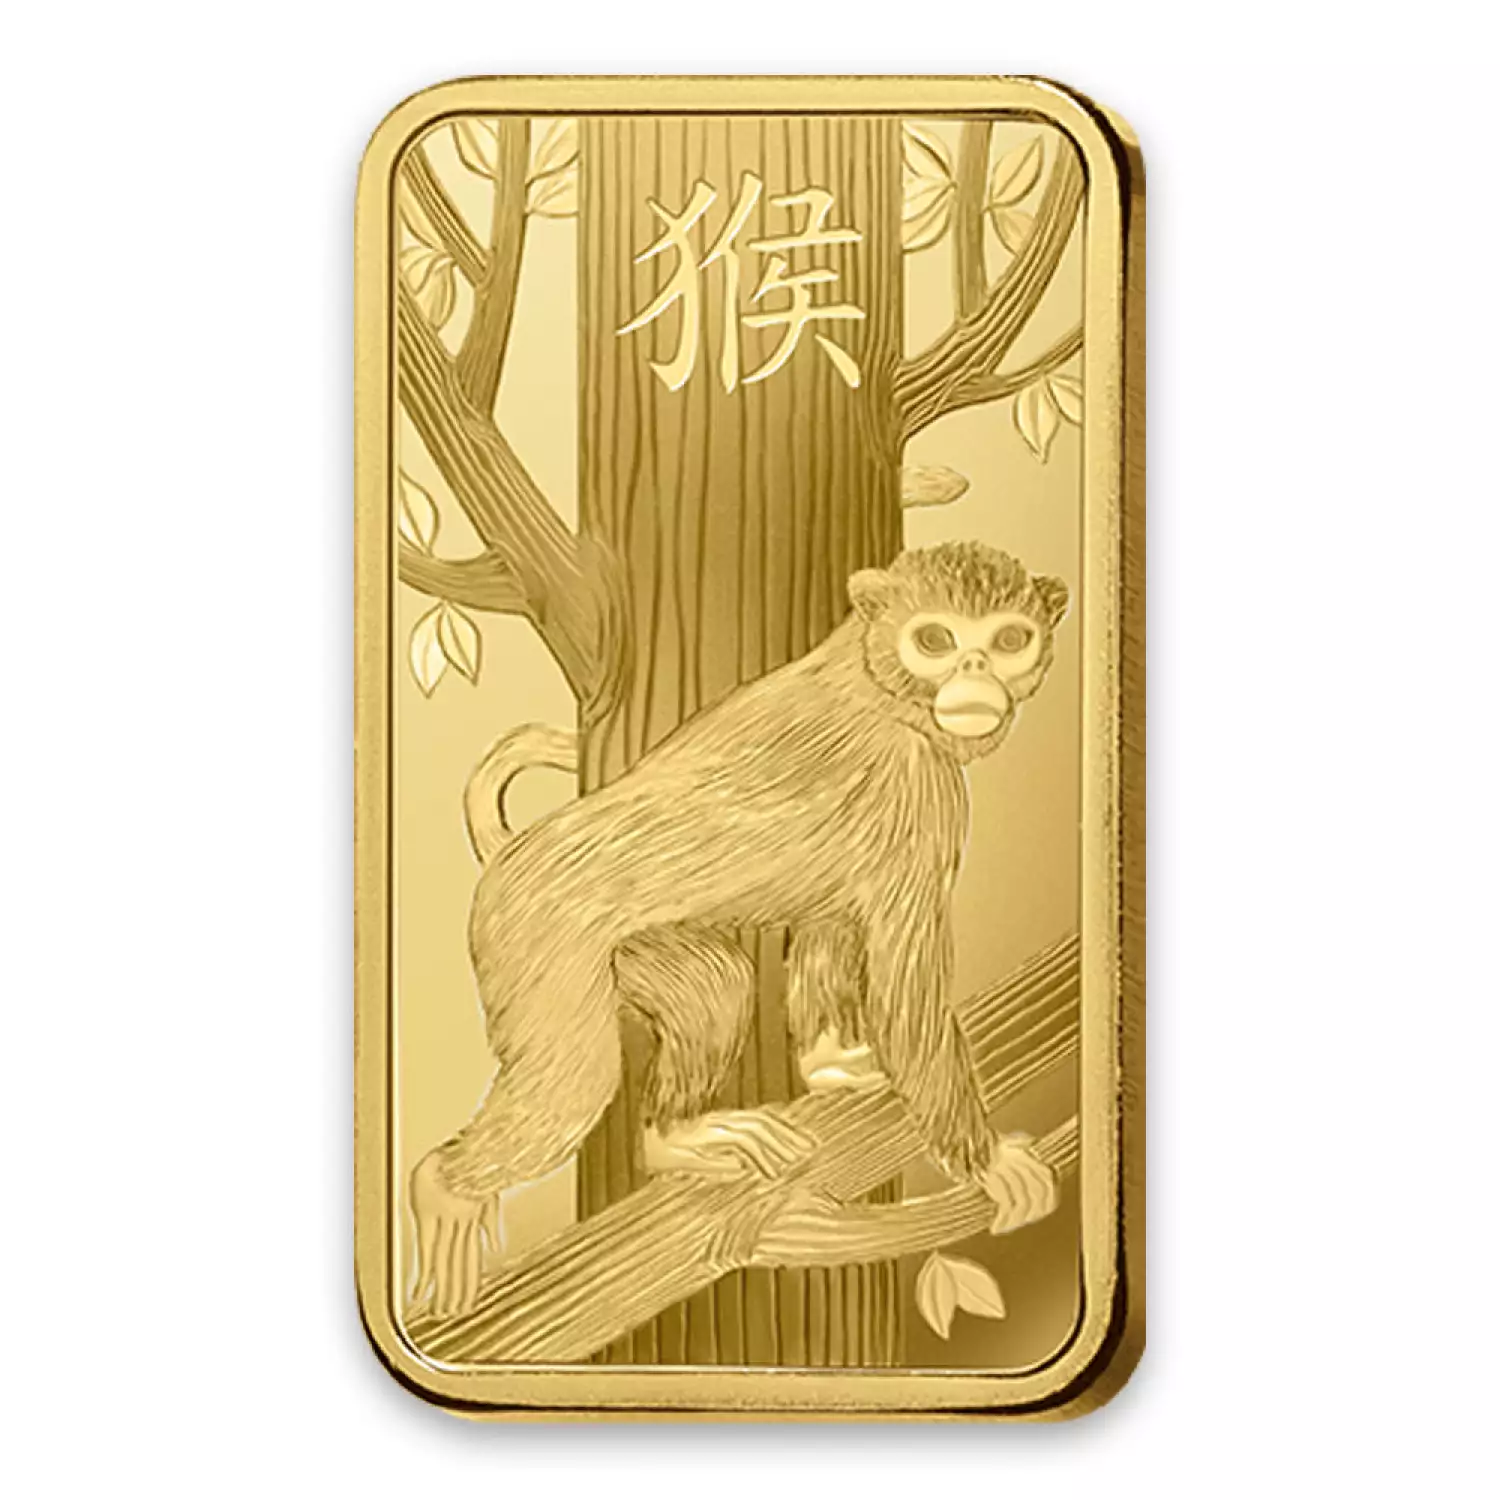 1oz PAMP Gold Bar - Lunar Monkey (2)